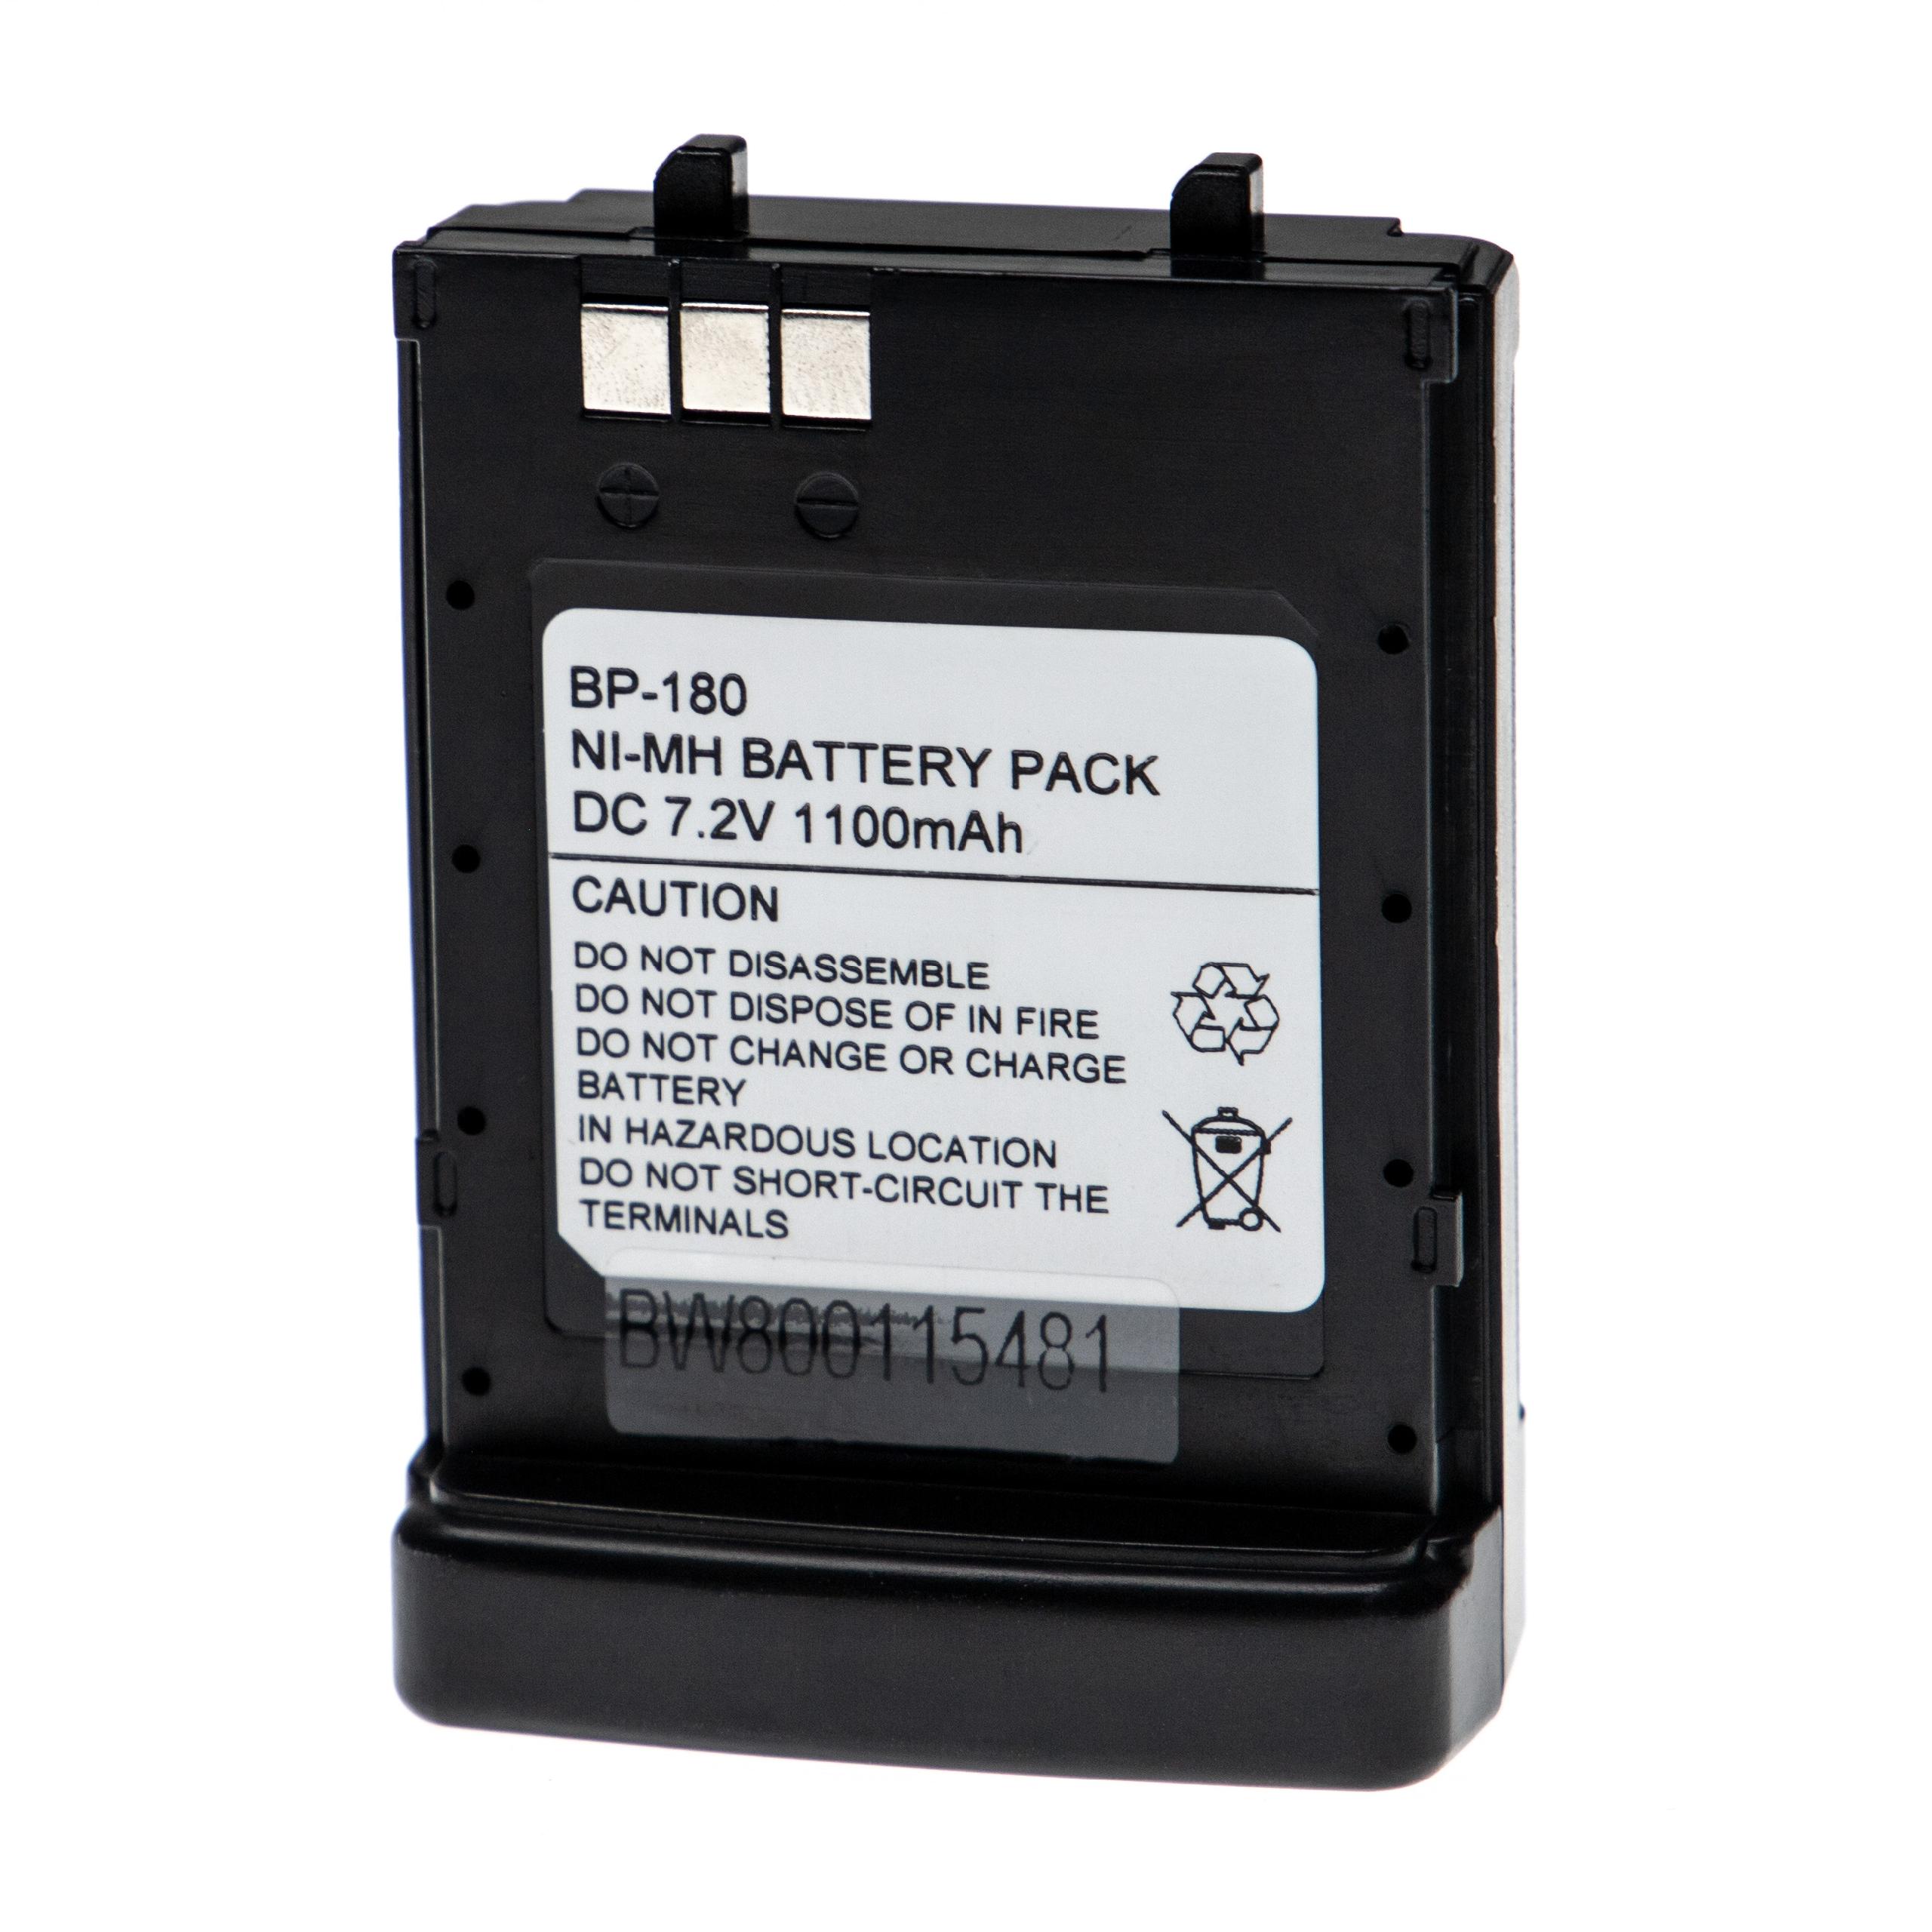 Batería reemplaza Icom BP-173, BP-180H, BP-180 para radio, walkie-talkie Icom - 1100 mAh 7,2 V NiMH